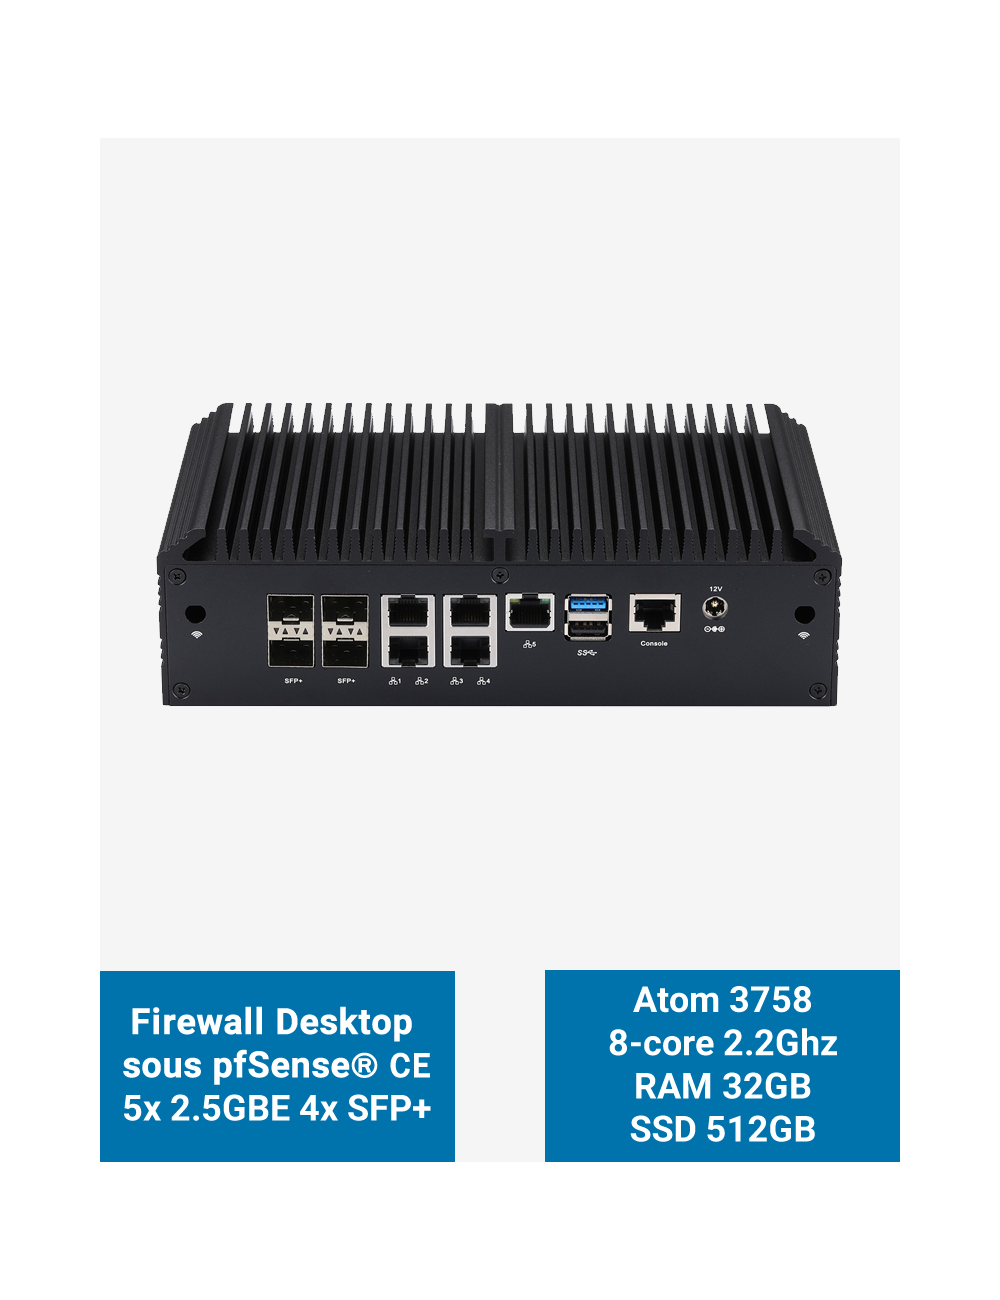 Firewall pfSense Q2x Celeron C3758 5x2.5G 4xSFP+ 32GB SSD 512GB